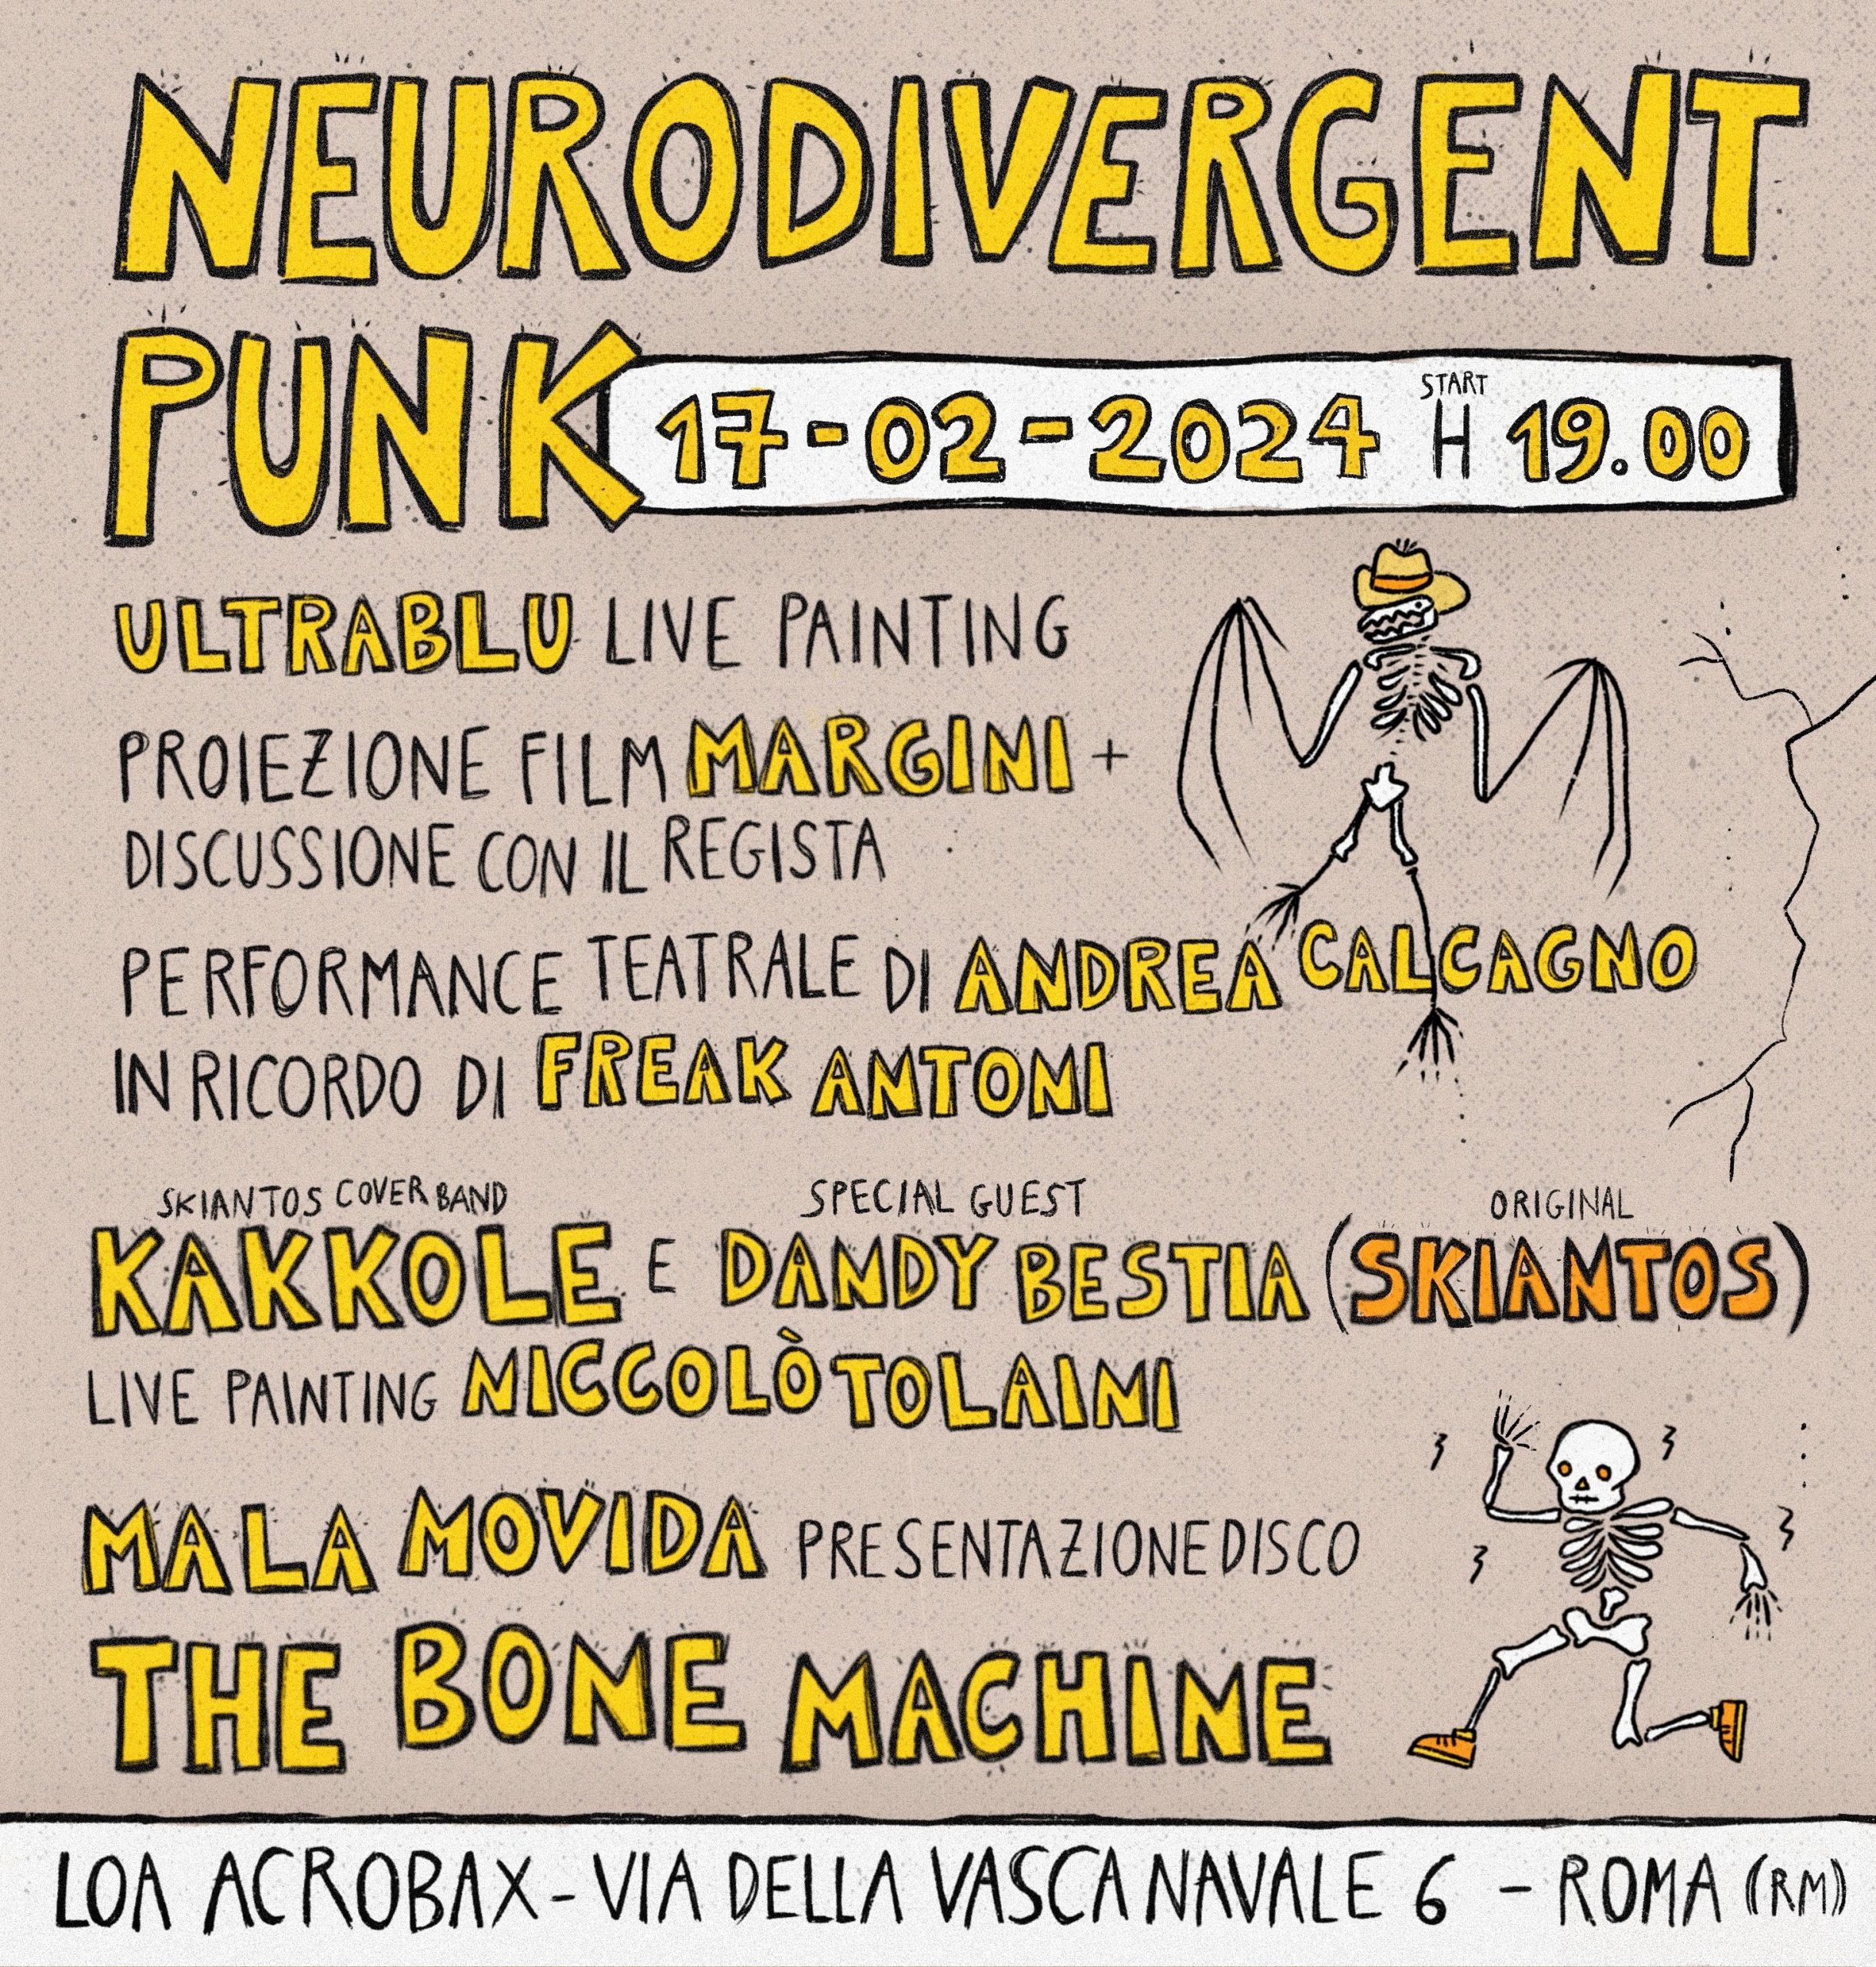 Sabato 17 Febbraio/ Neurodivergent Punk